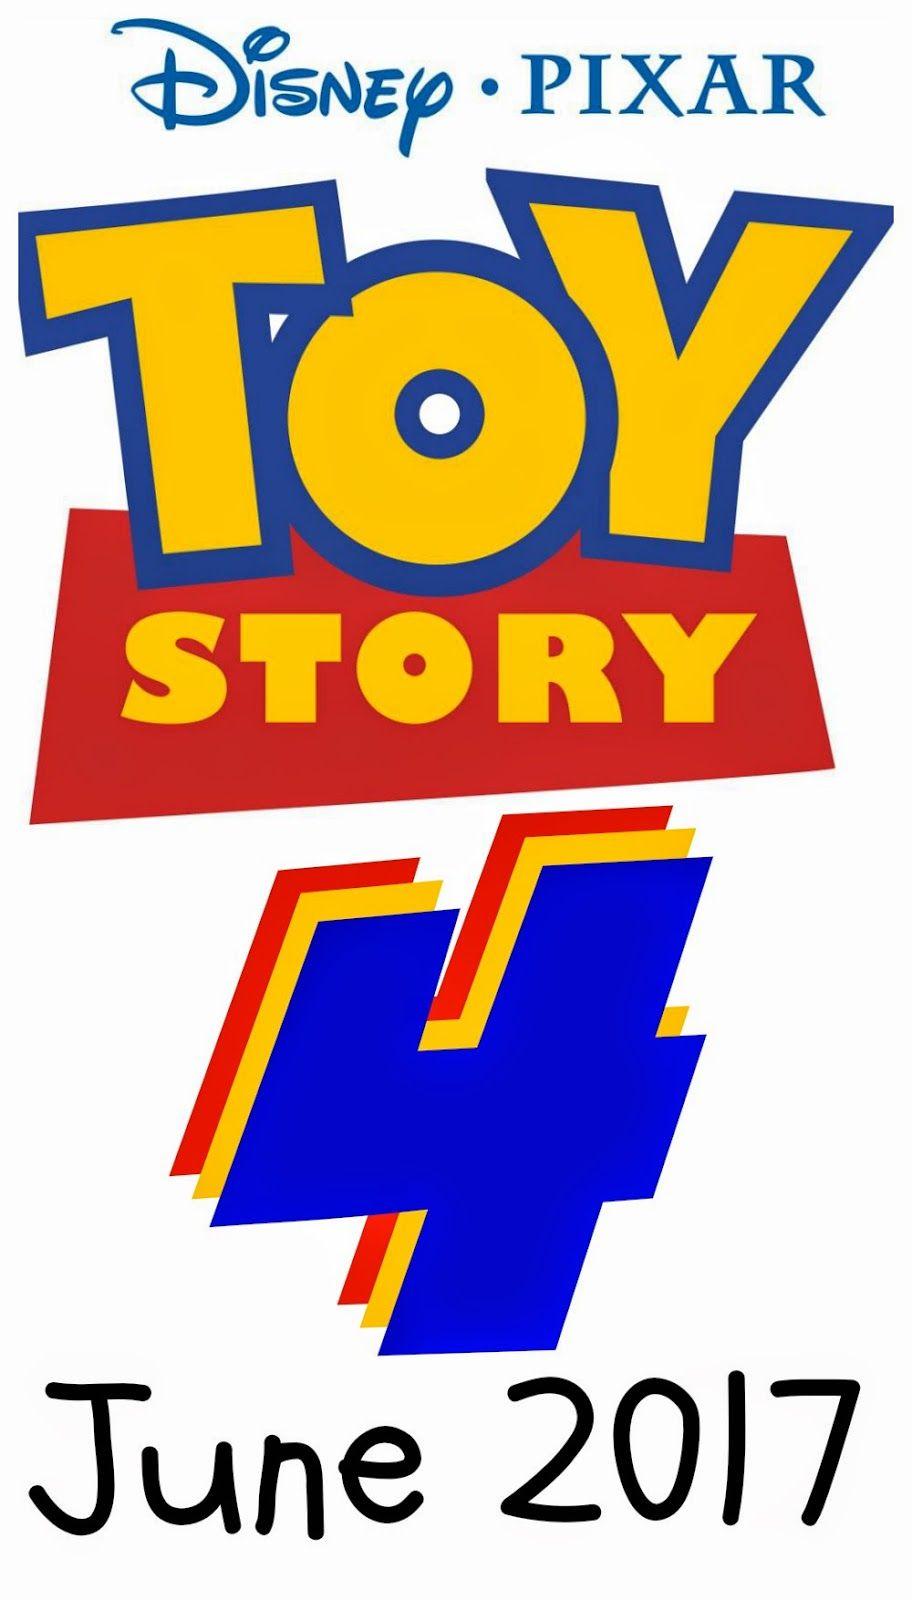 Disney Pixar Toy Story Logo - Disney Sisters: Toy Story 4 Announced by Disney Pixar for June 2017 ...